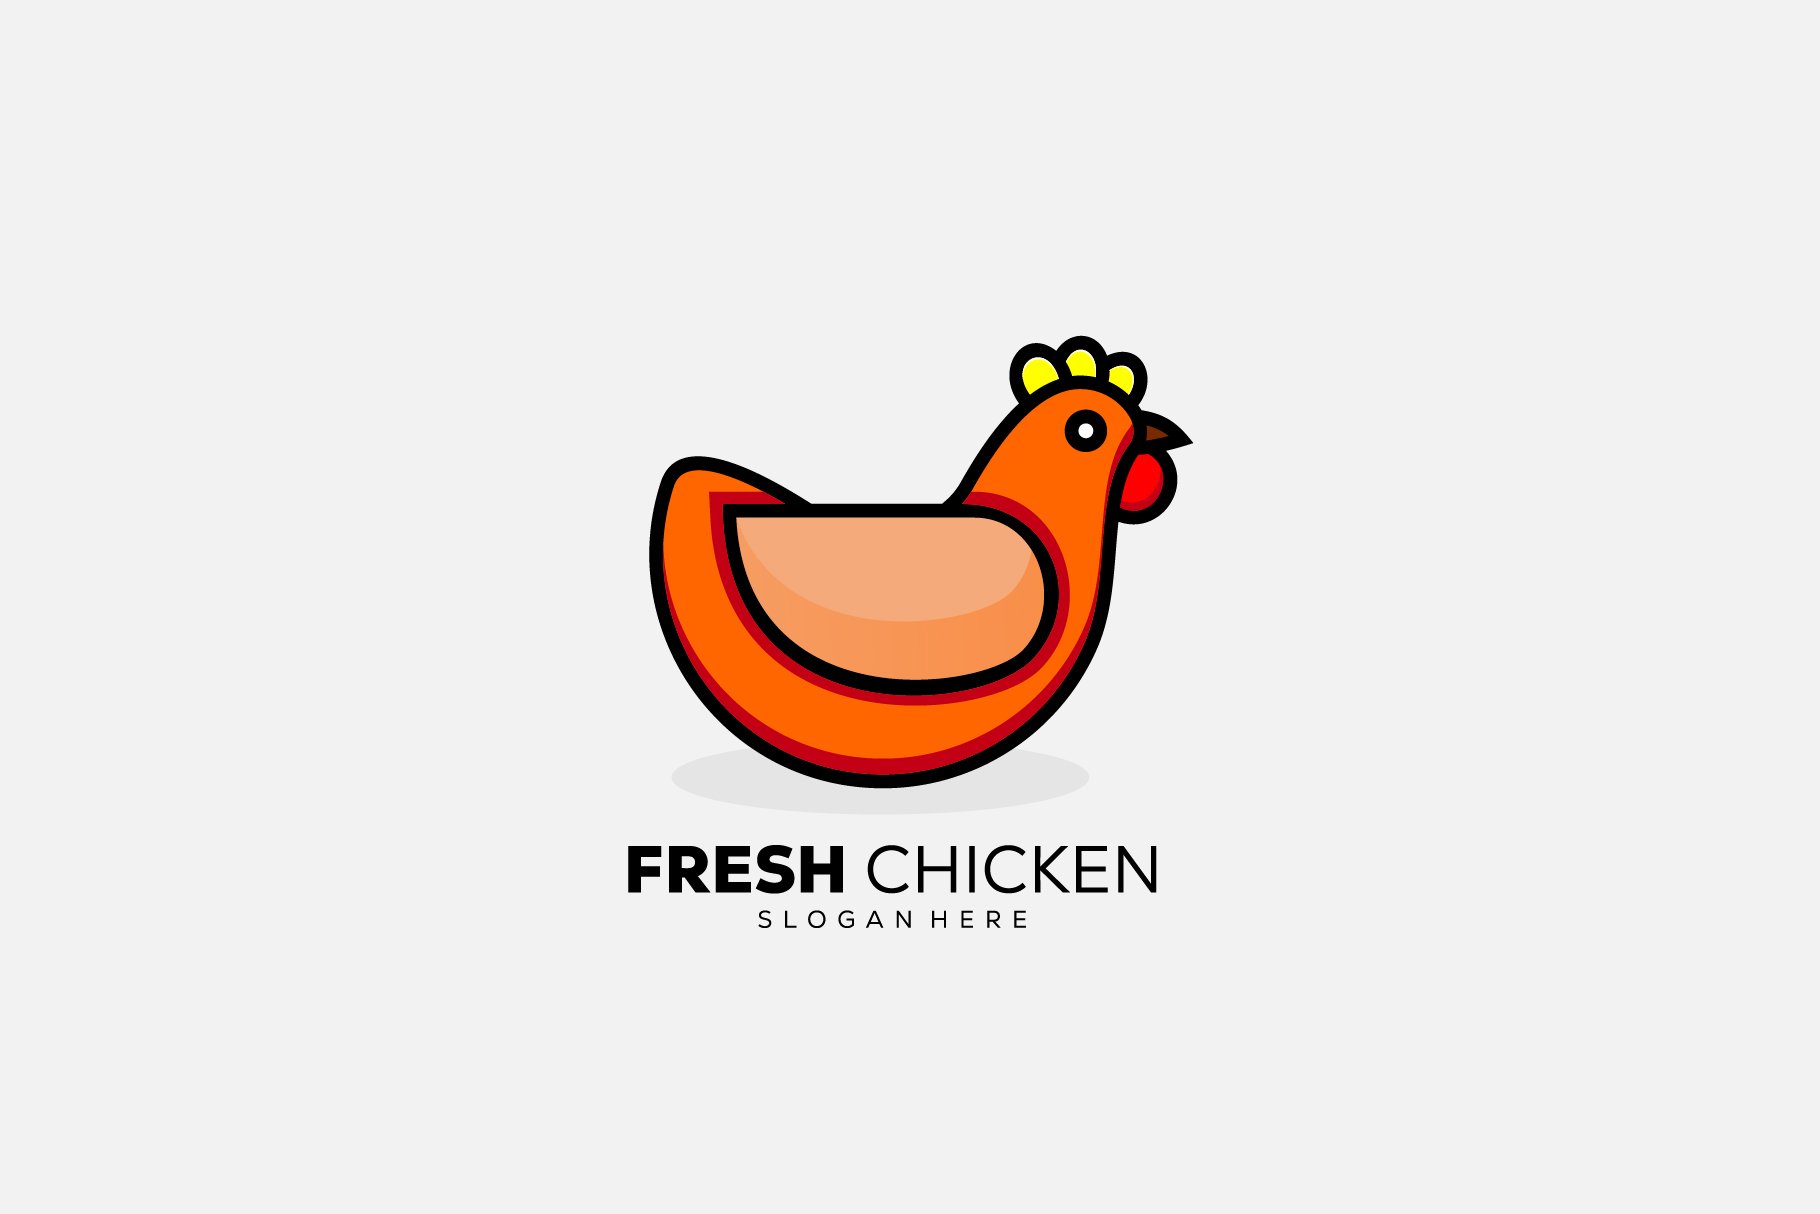 fresh chicken logo design logo symbo cover image.